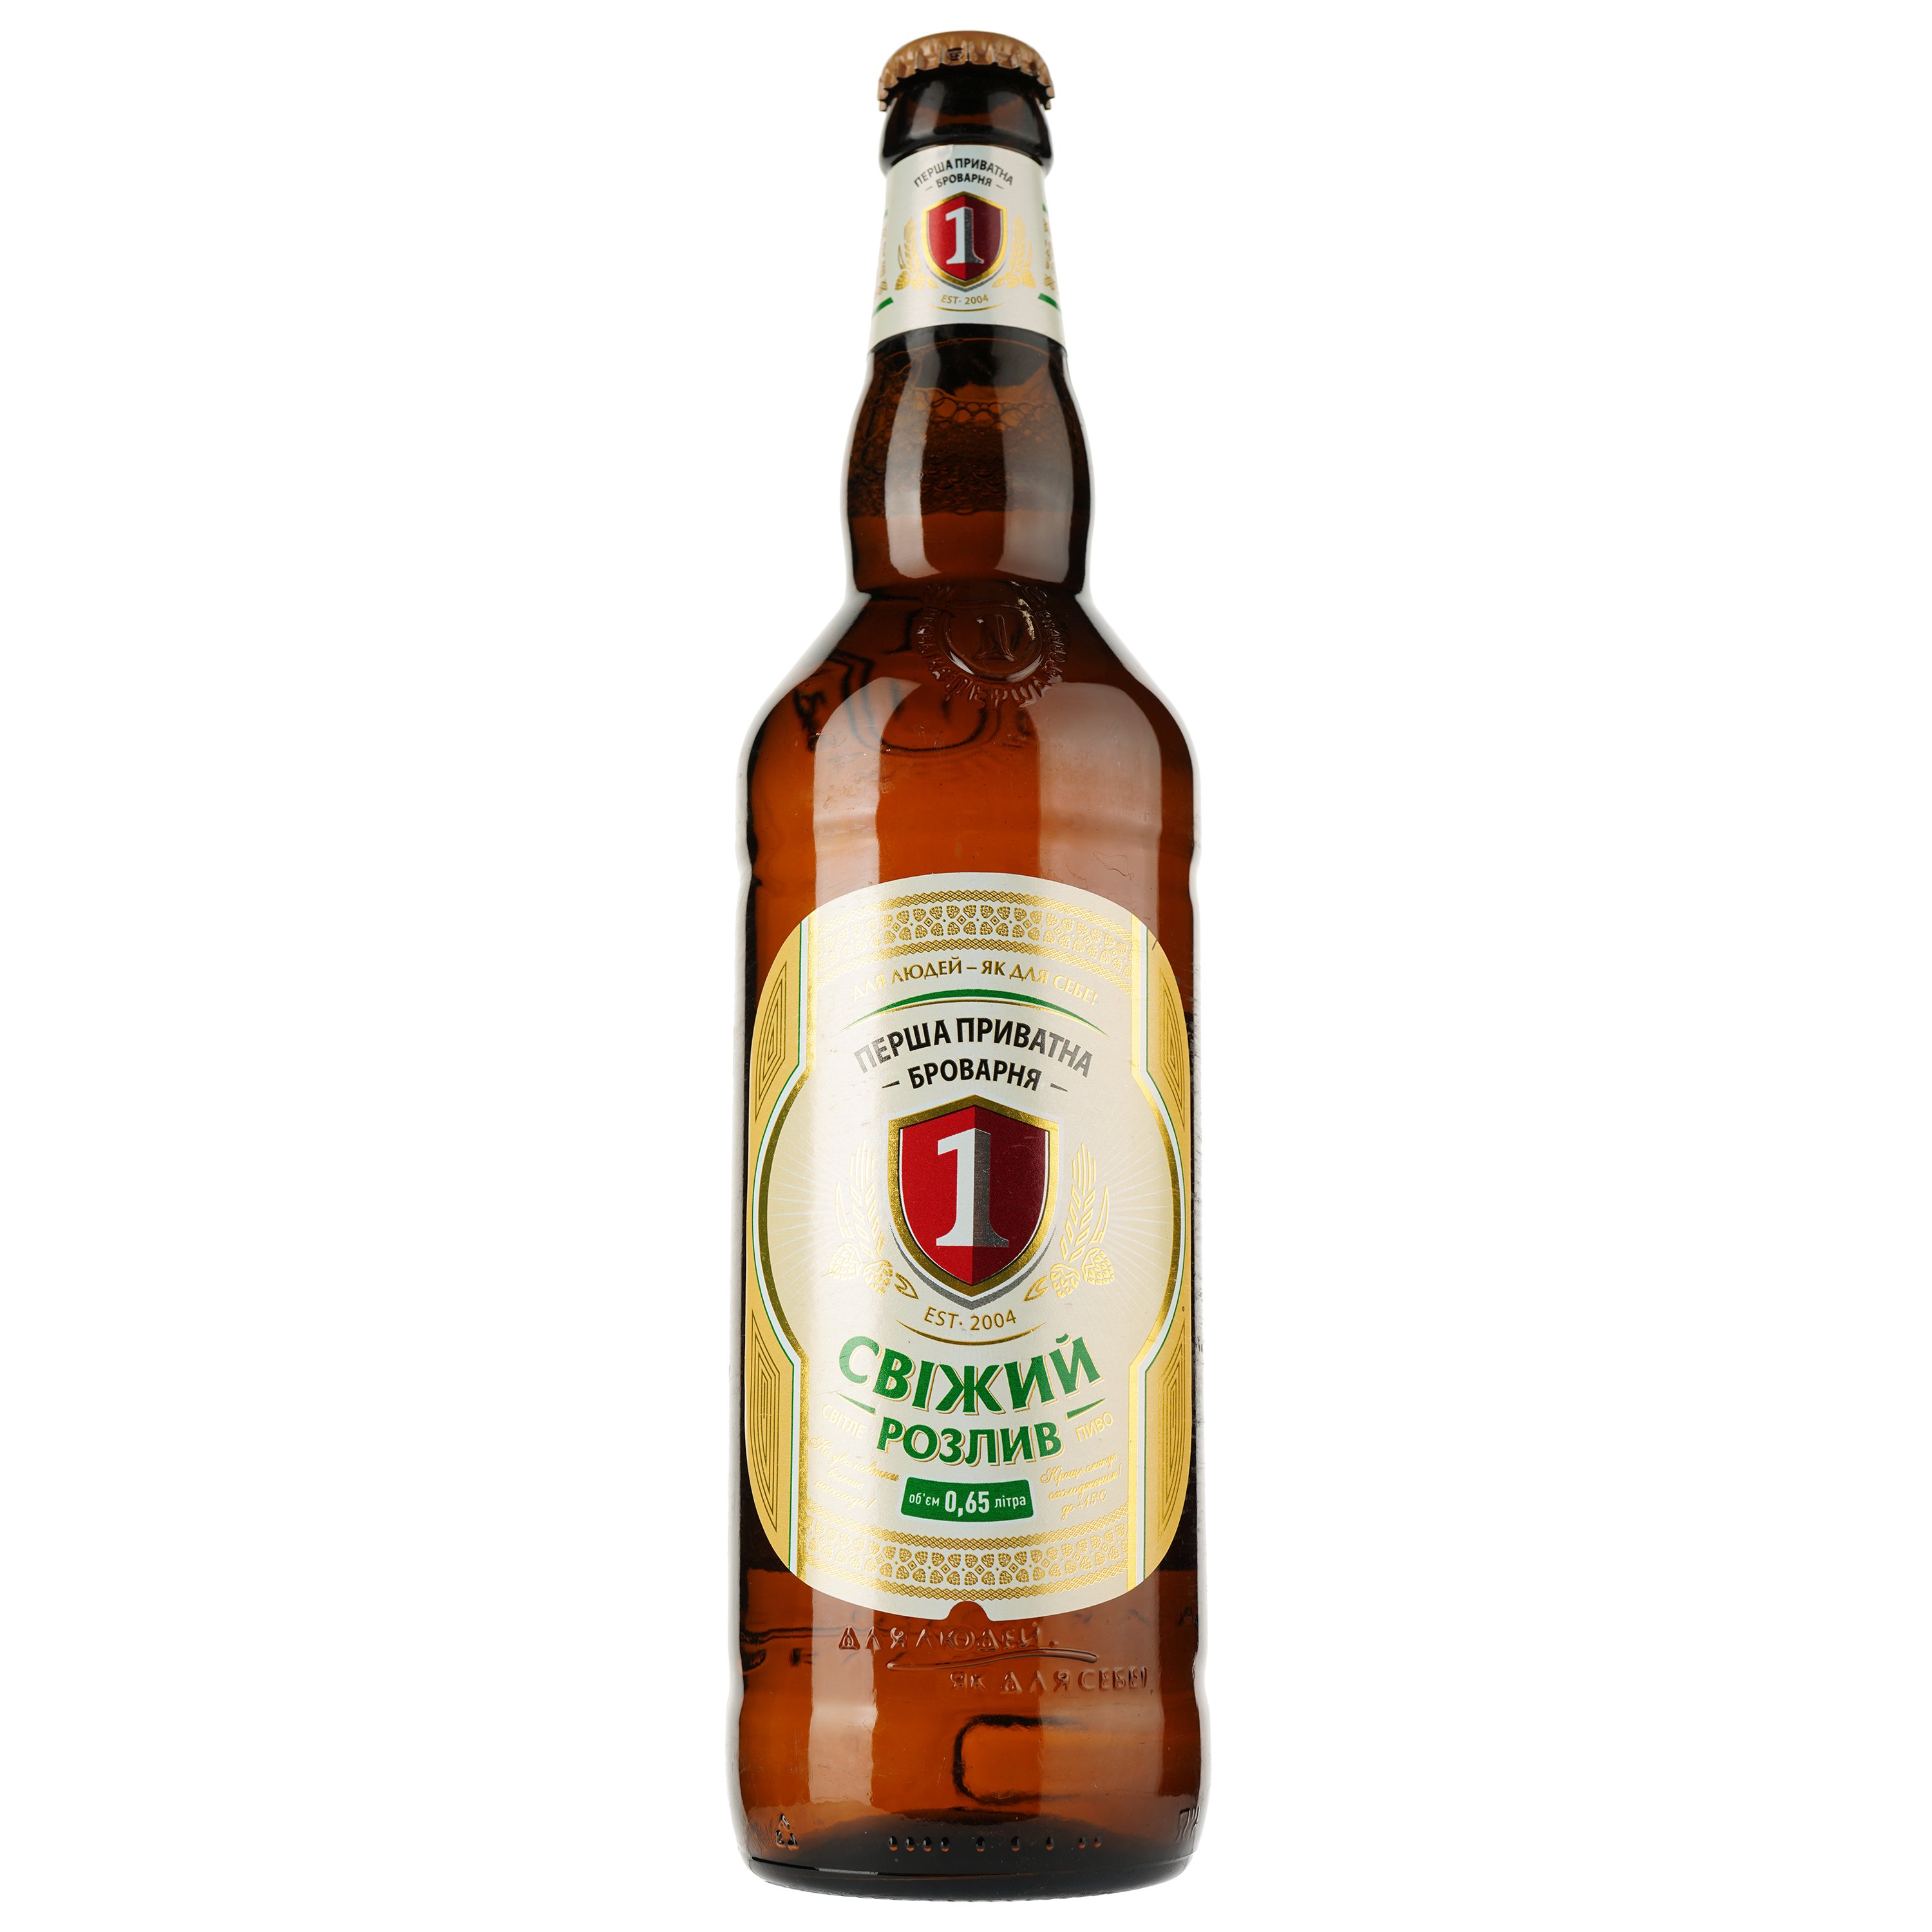 Пиво Перша приватна броварня Свежий разлив, светлое, 4,5%, 0,65 л (617526) - фото 1